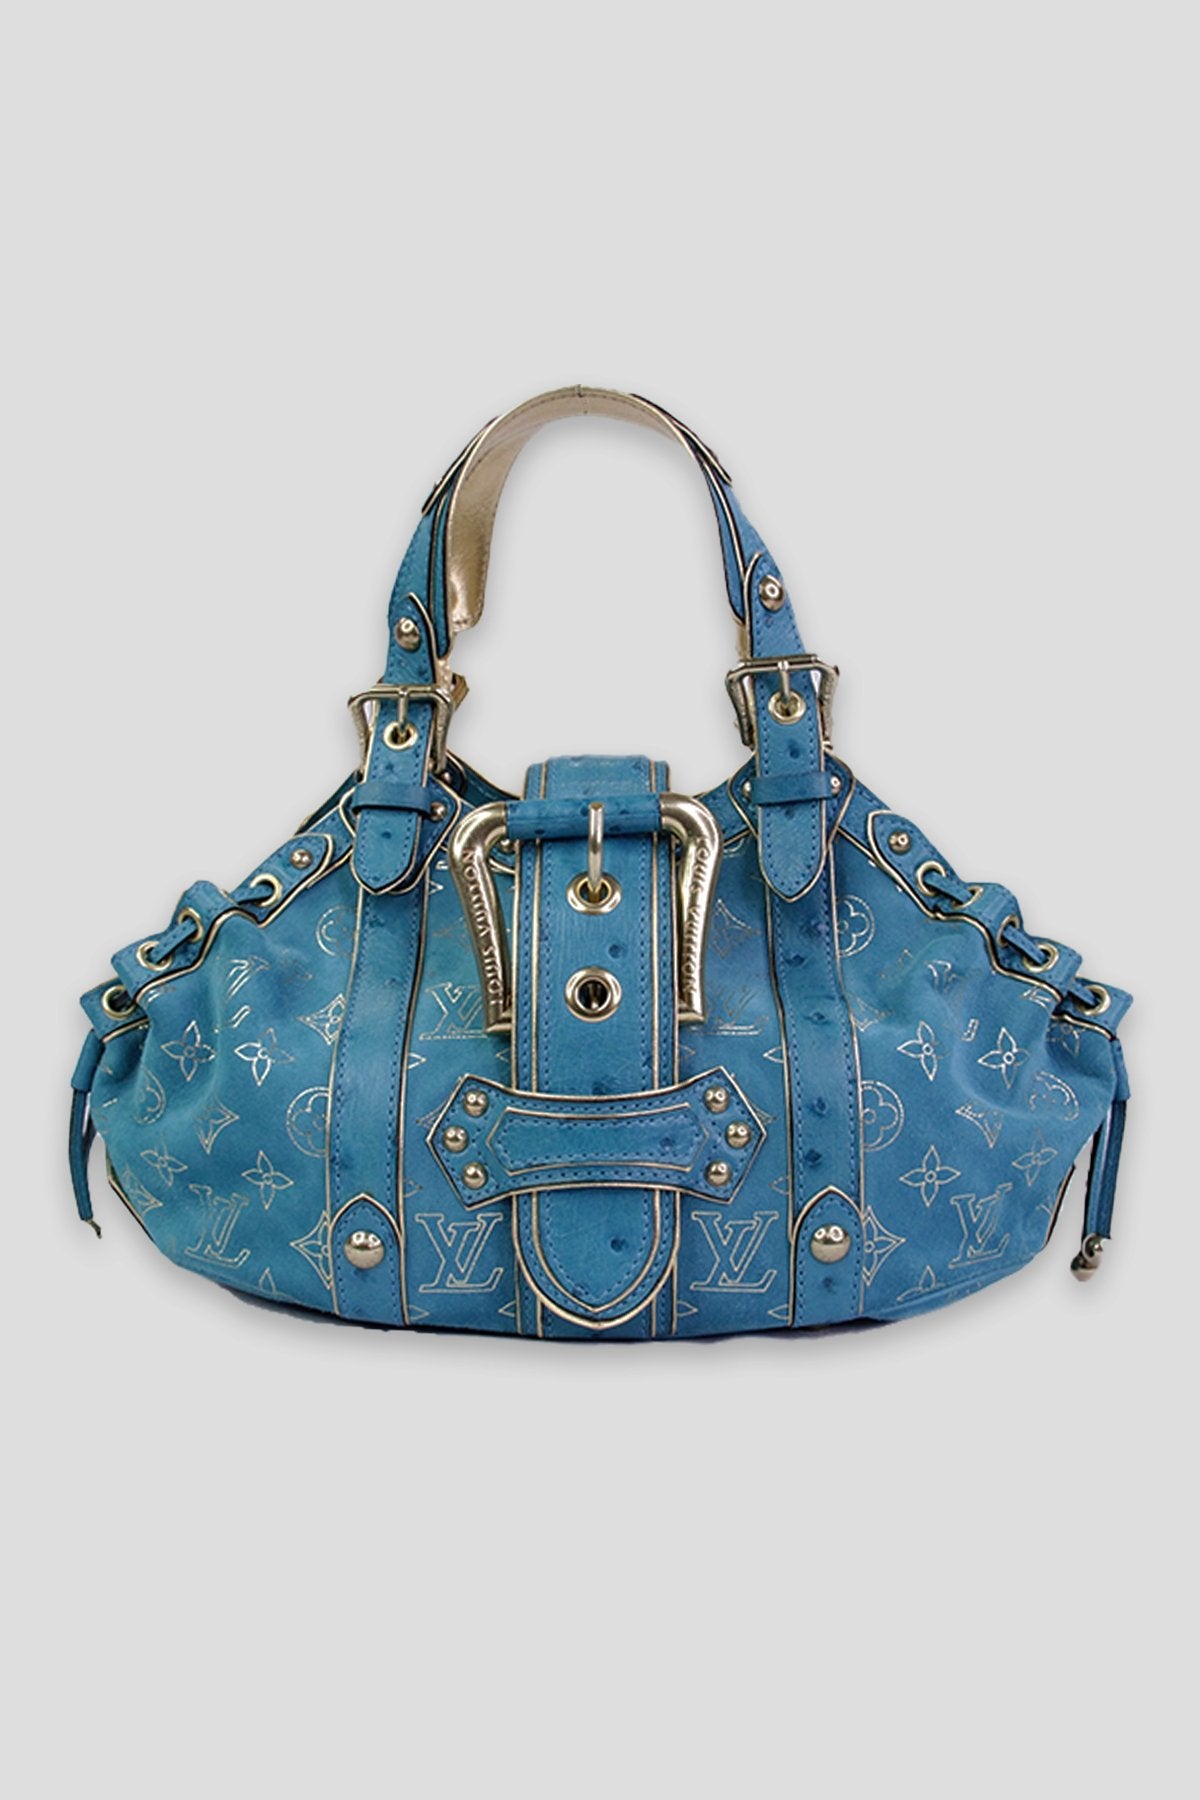 Louis Vuitton Turquoise and Gold Monogram Handbag - shop-olivia.com